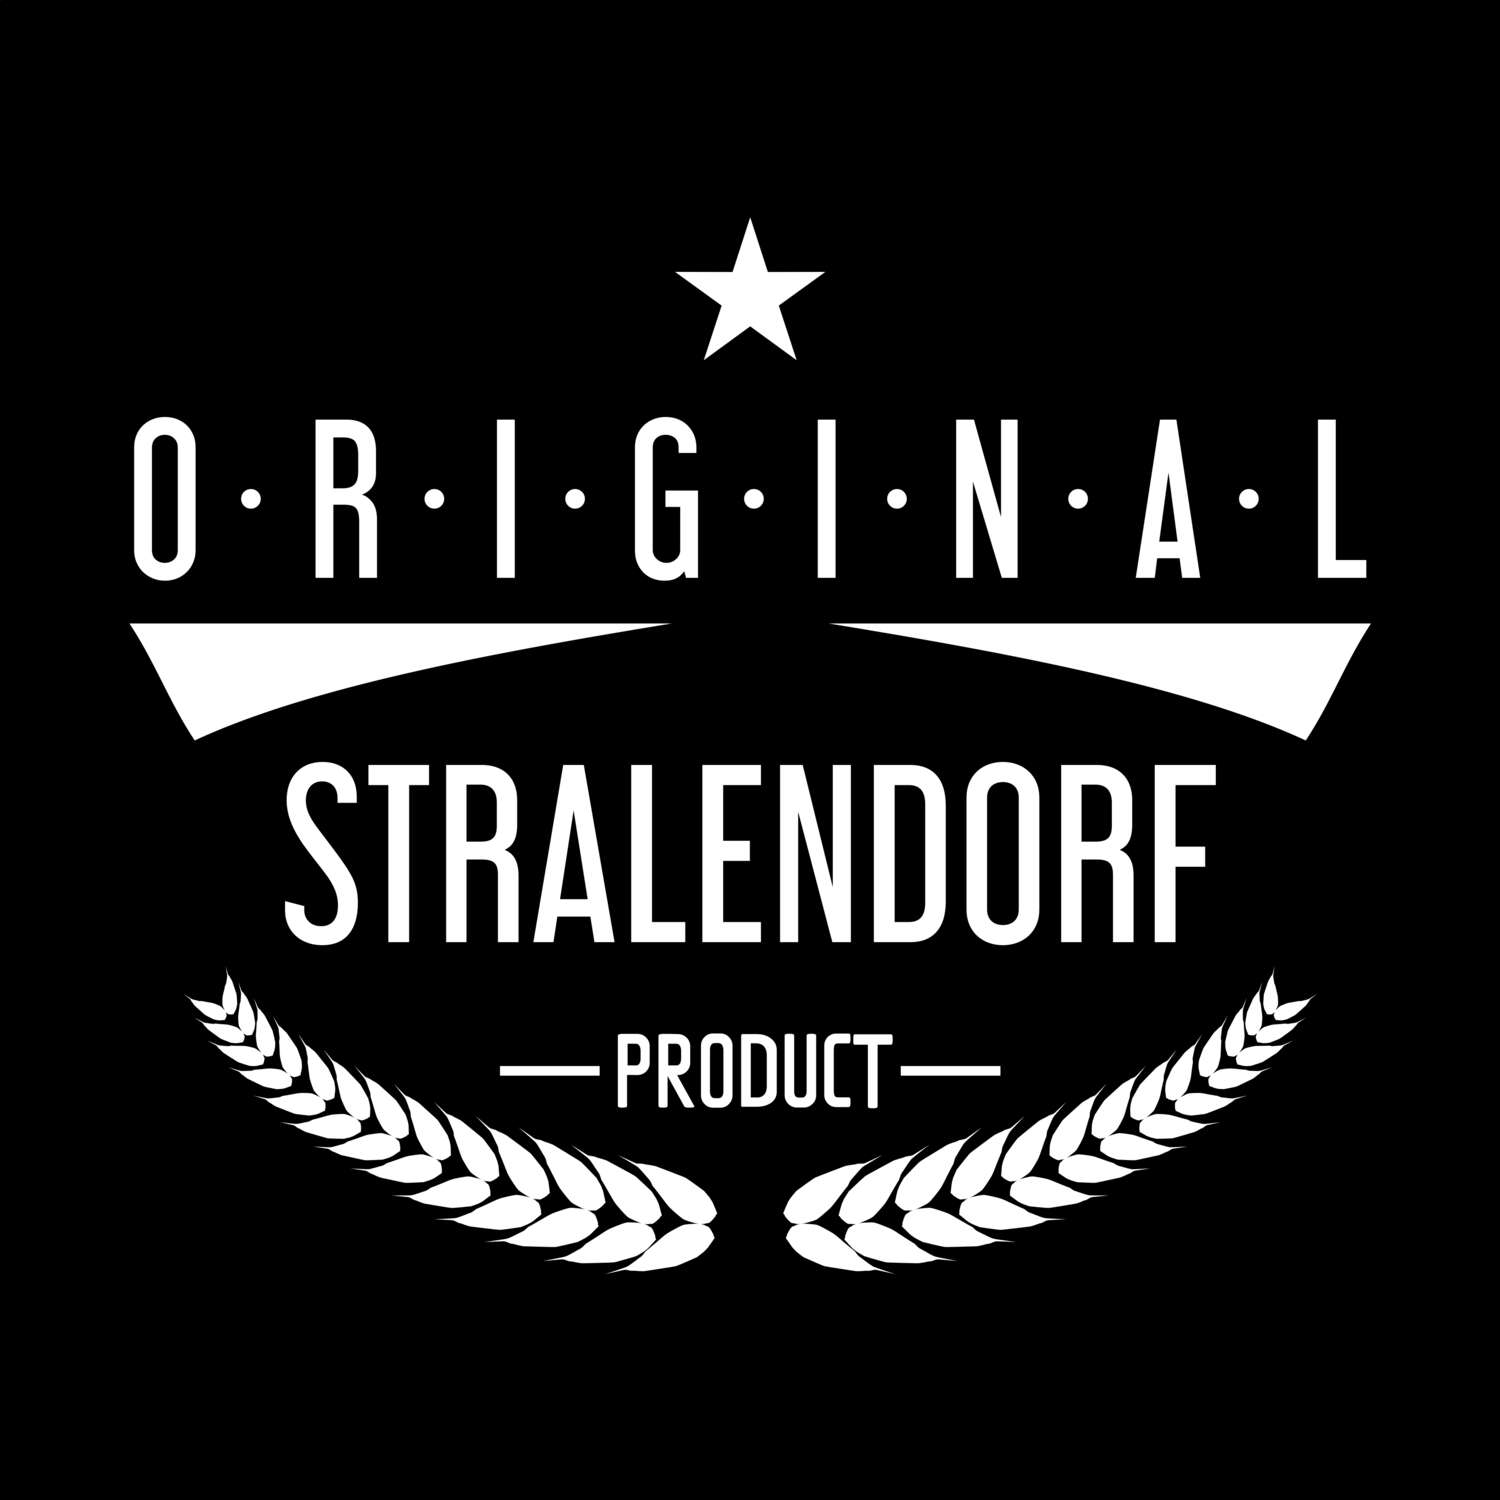 Stralendorf T-Shirt »Original Product«